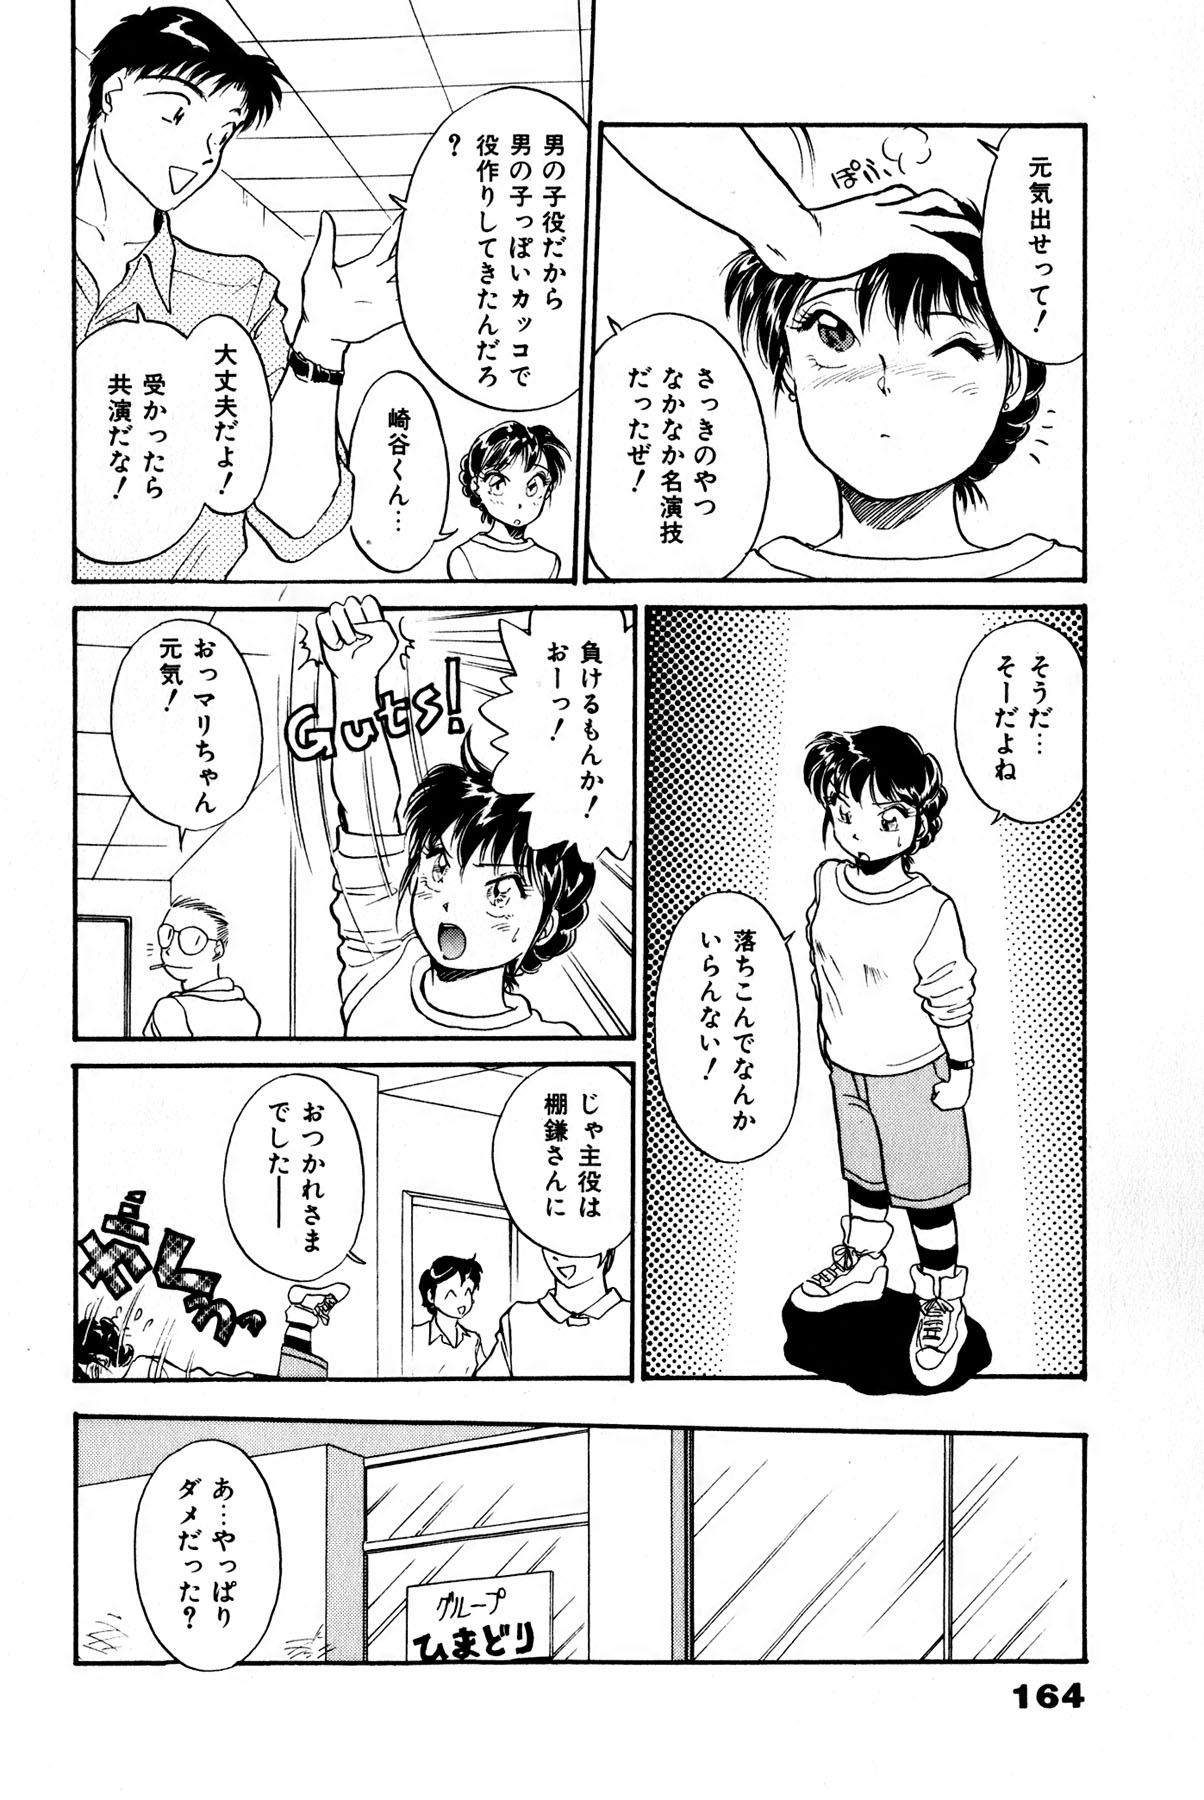 Otakara Comic 164